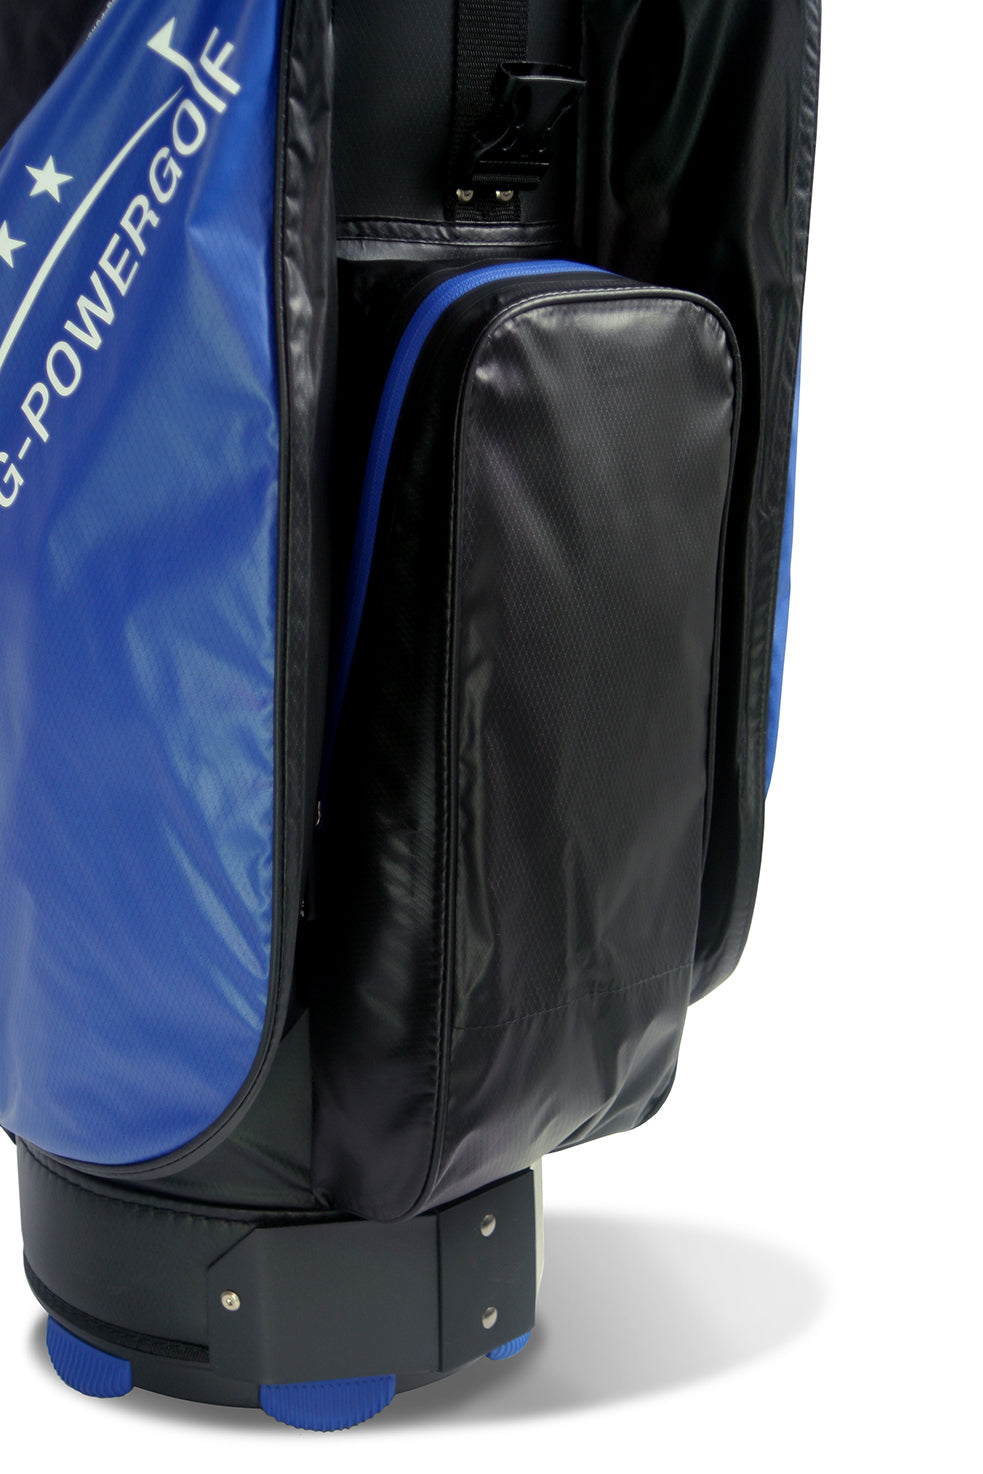 PG Powergolf Orga 105 Dry M cart bag